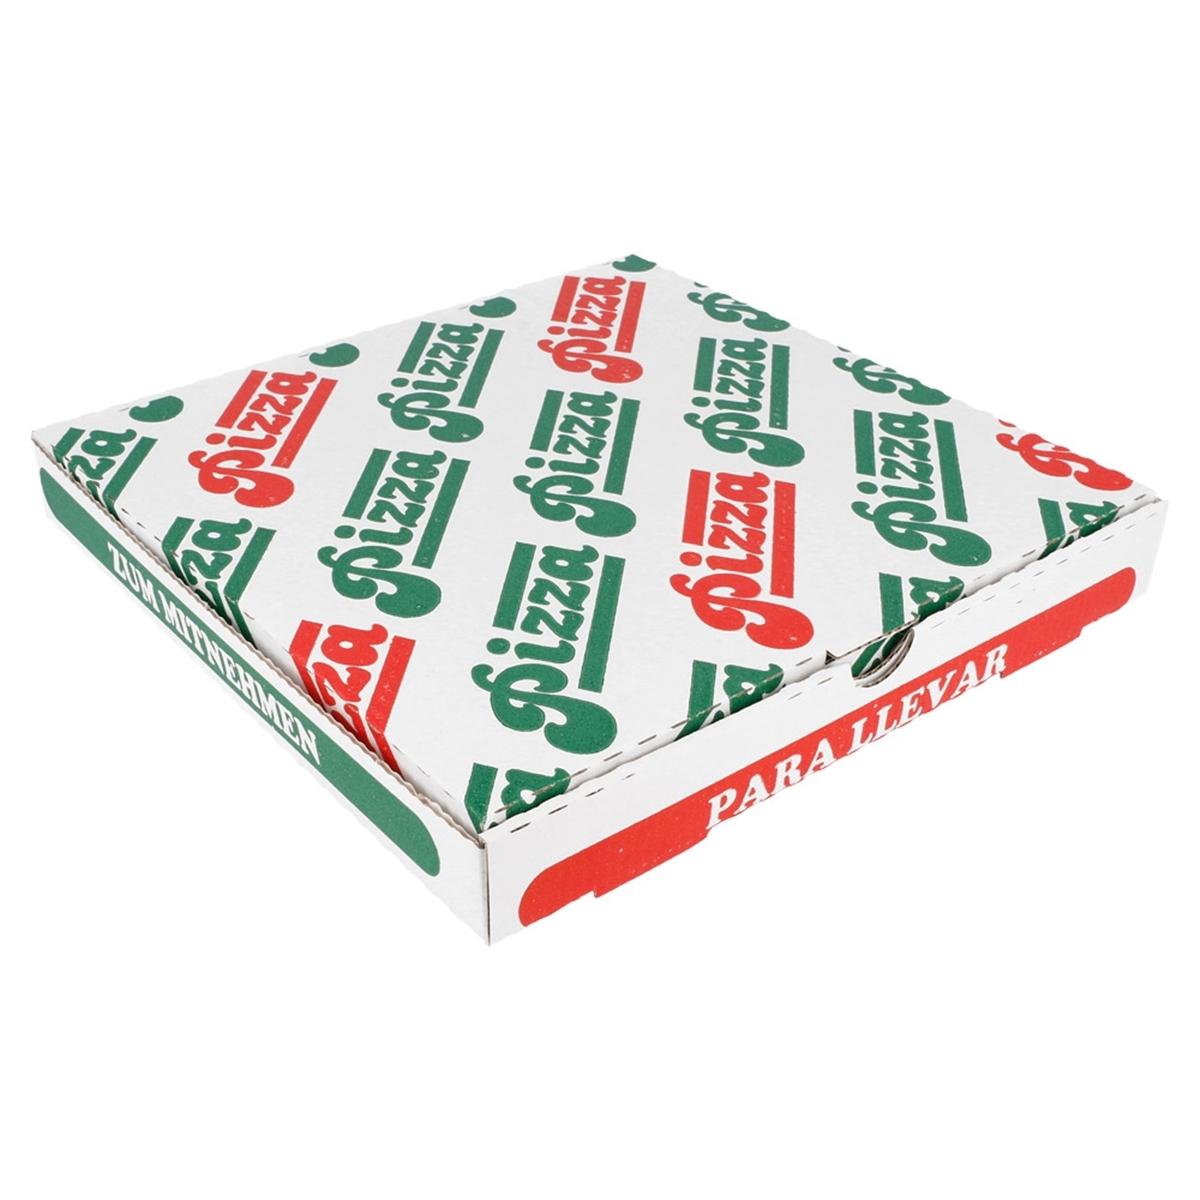 oferta cajas pizza